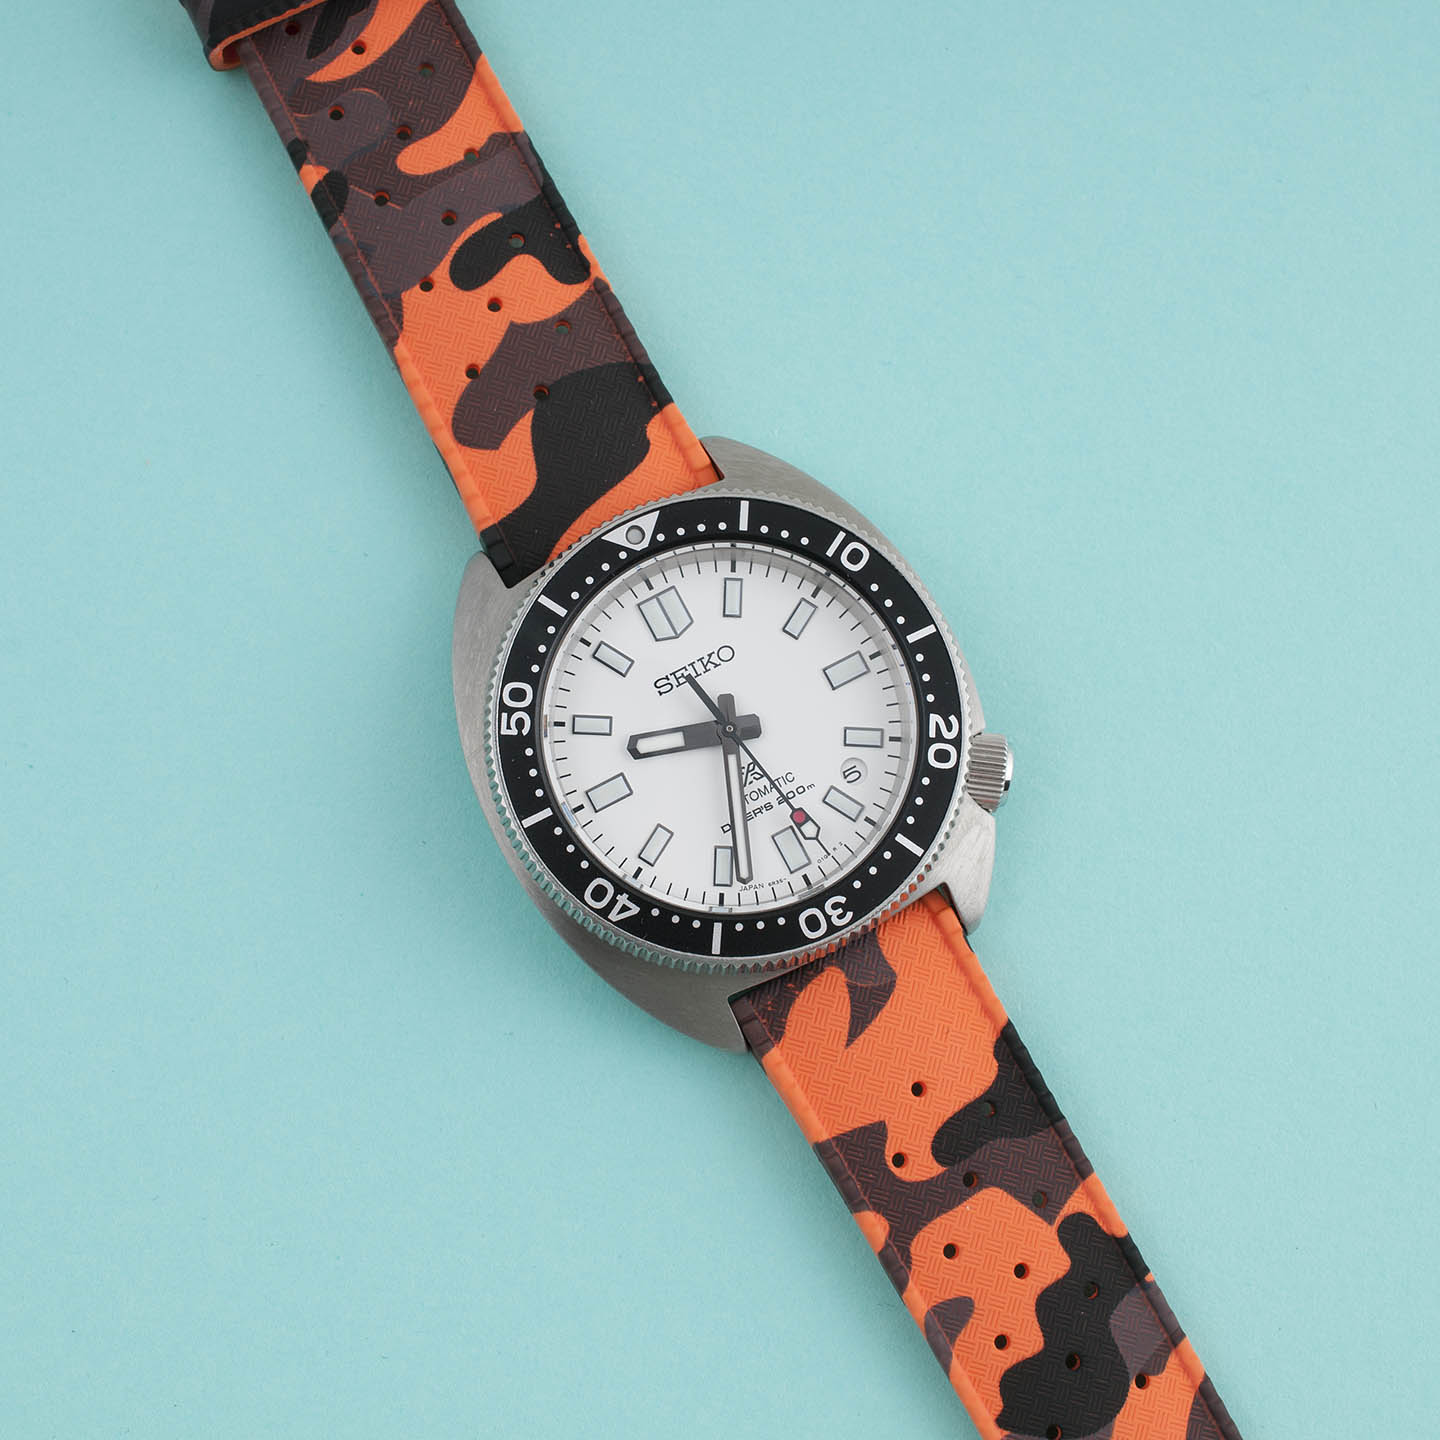 Tropical retro vintage replacement watch strap band FKM rubber tropic 19mm 20mm 21mm 22mm orange camo camouflage seiko spb313 slim willard white